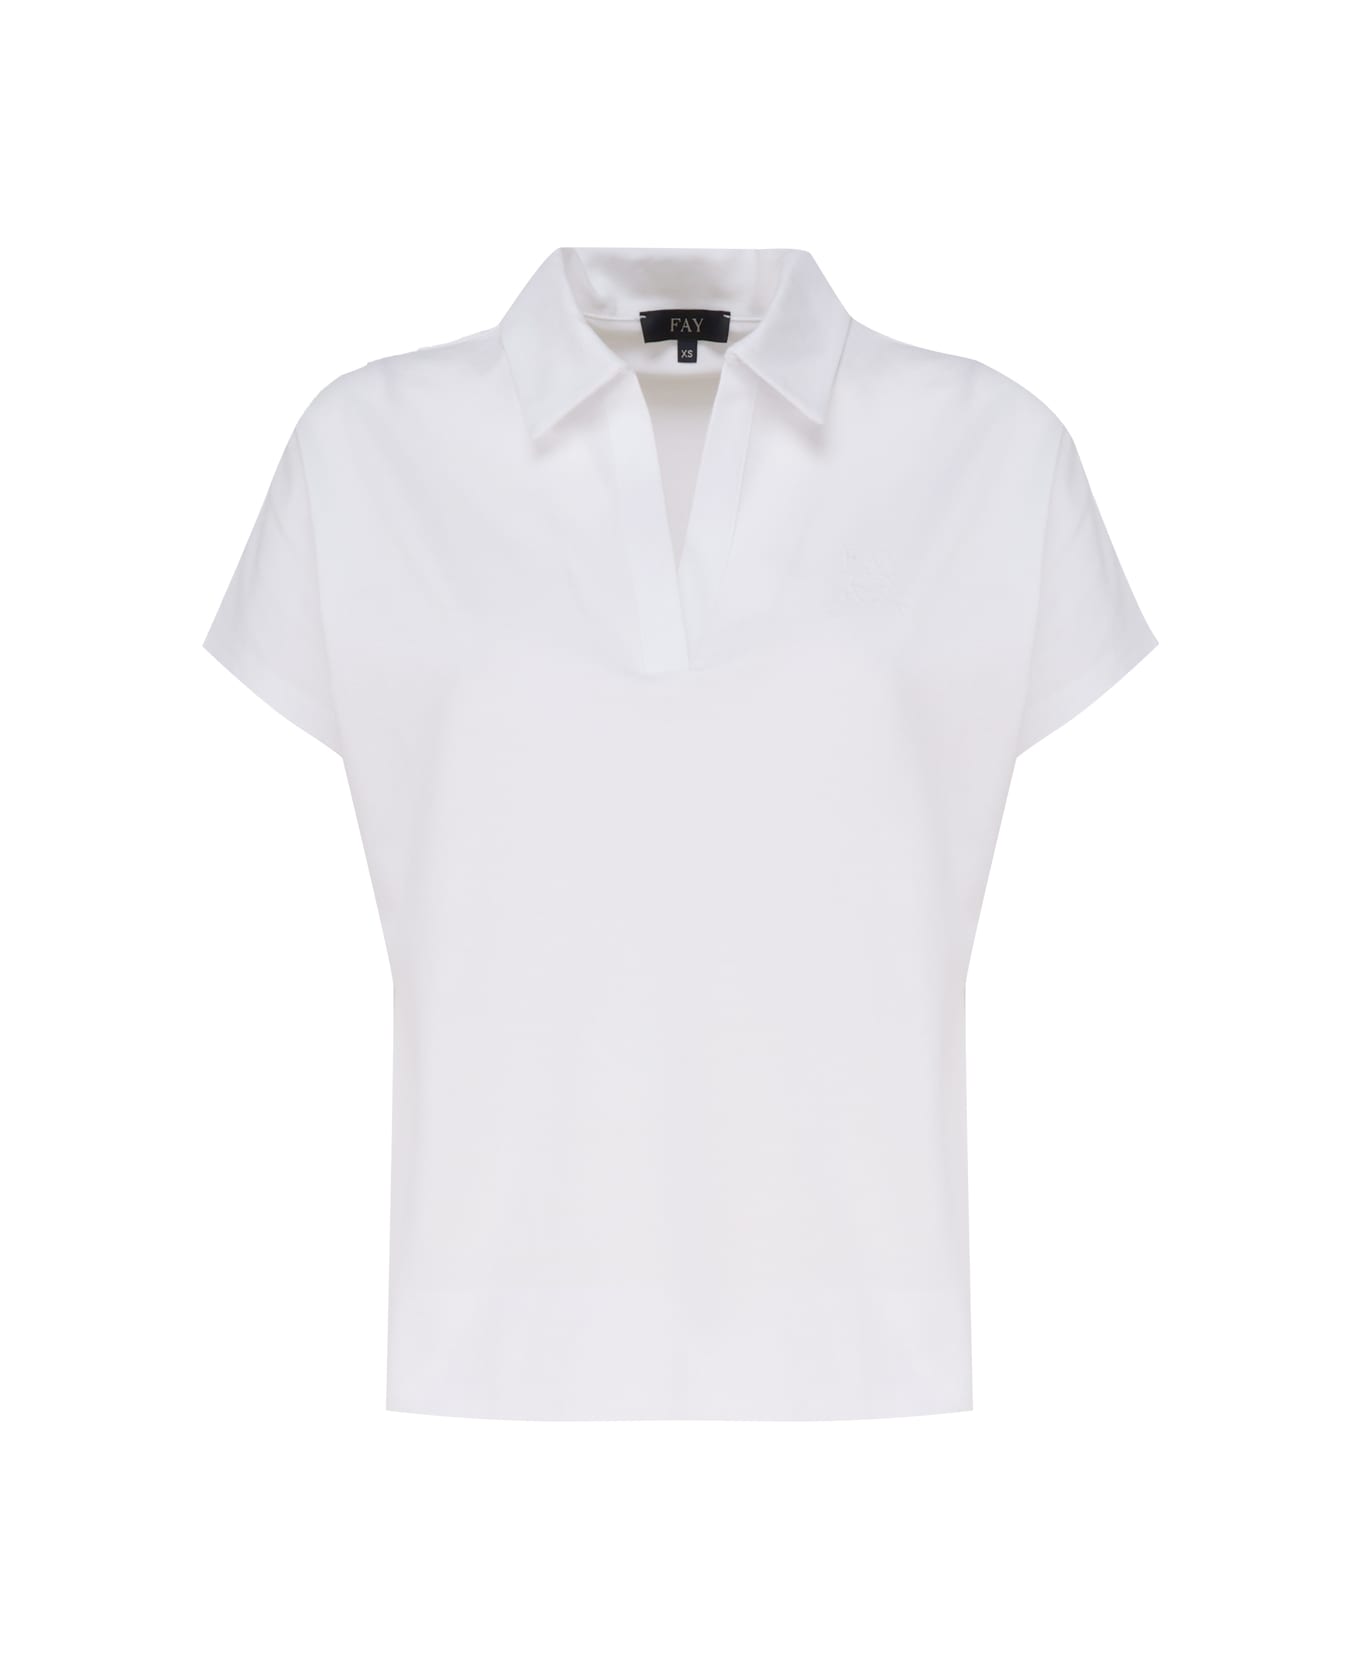 Fay Short Sleeve Polo Shirt - White ポロシャツ